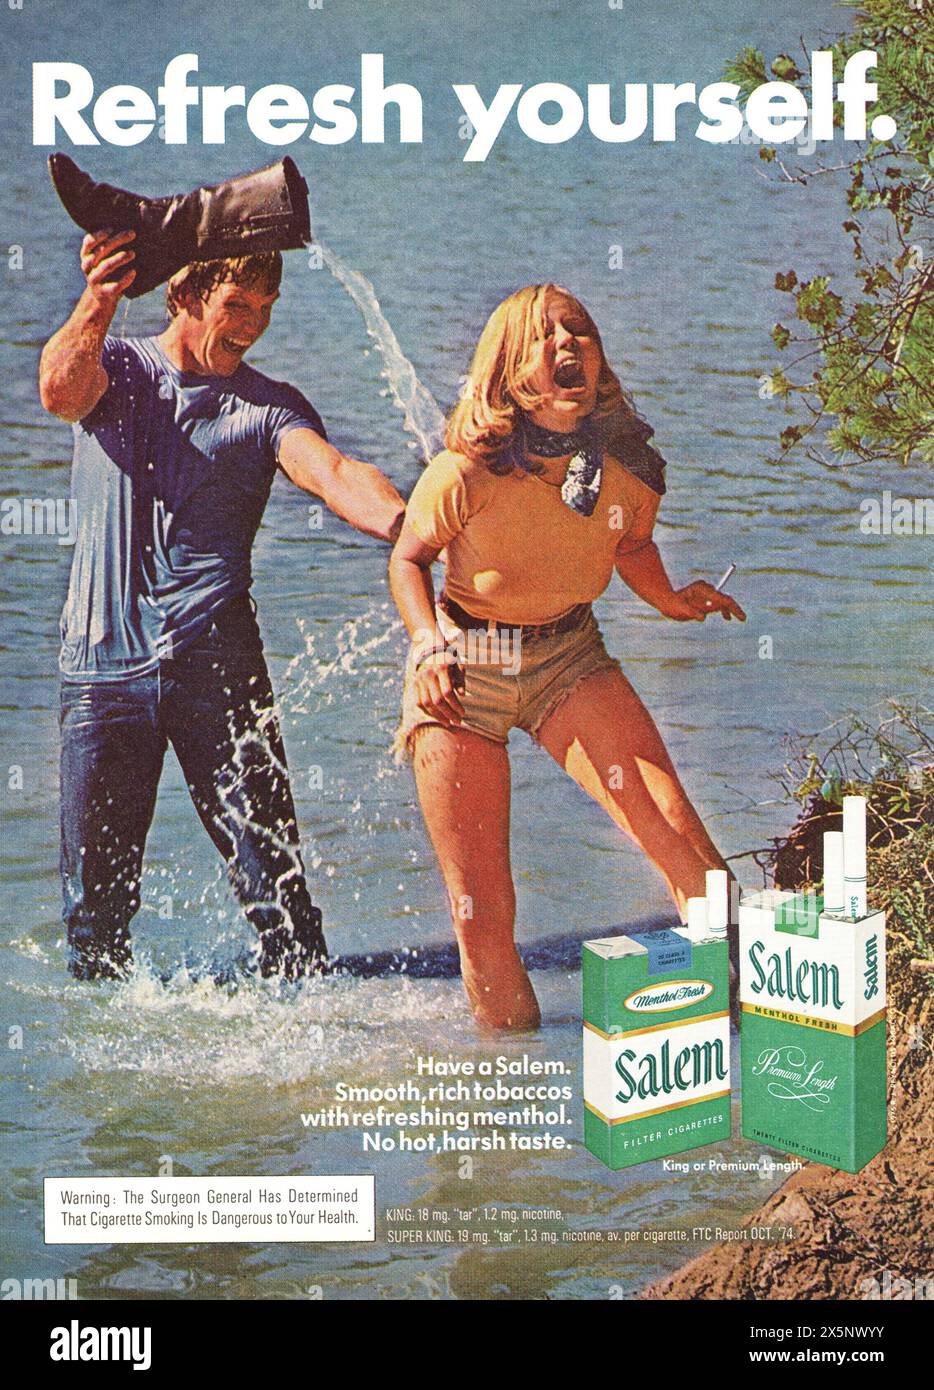 Vintage 'Playboy' magazine April 1975 issue advert, USA Stock Photo